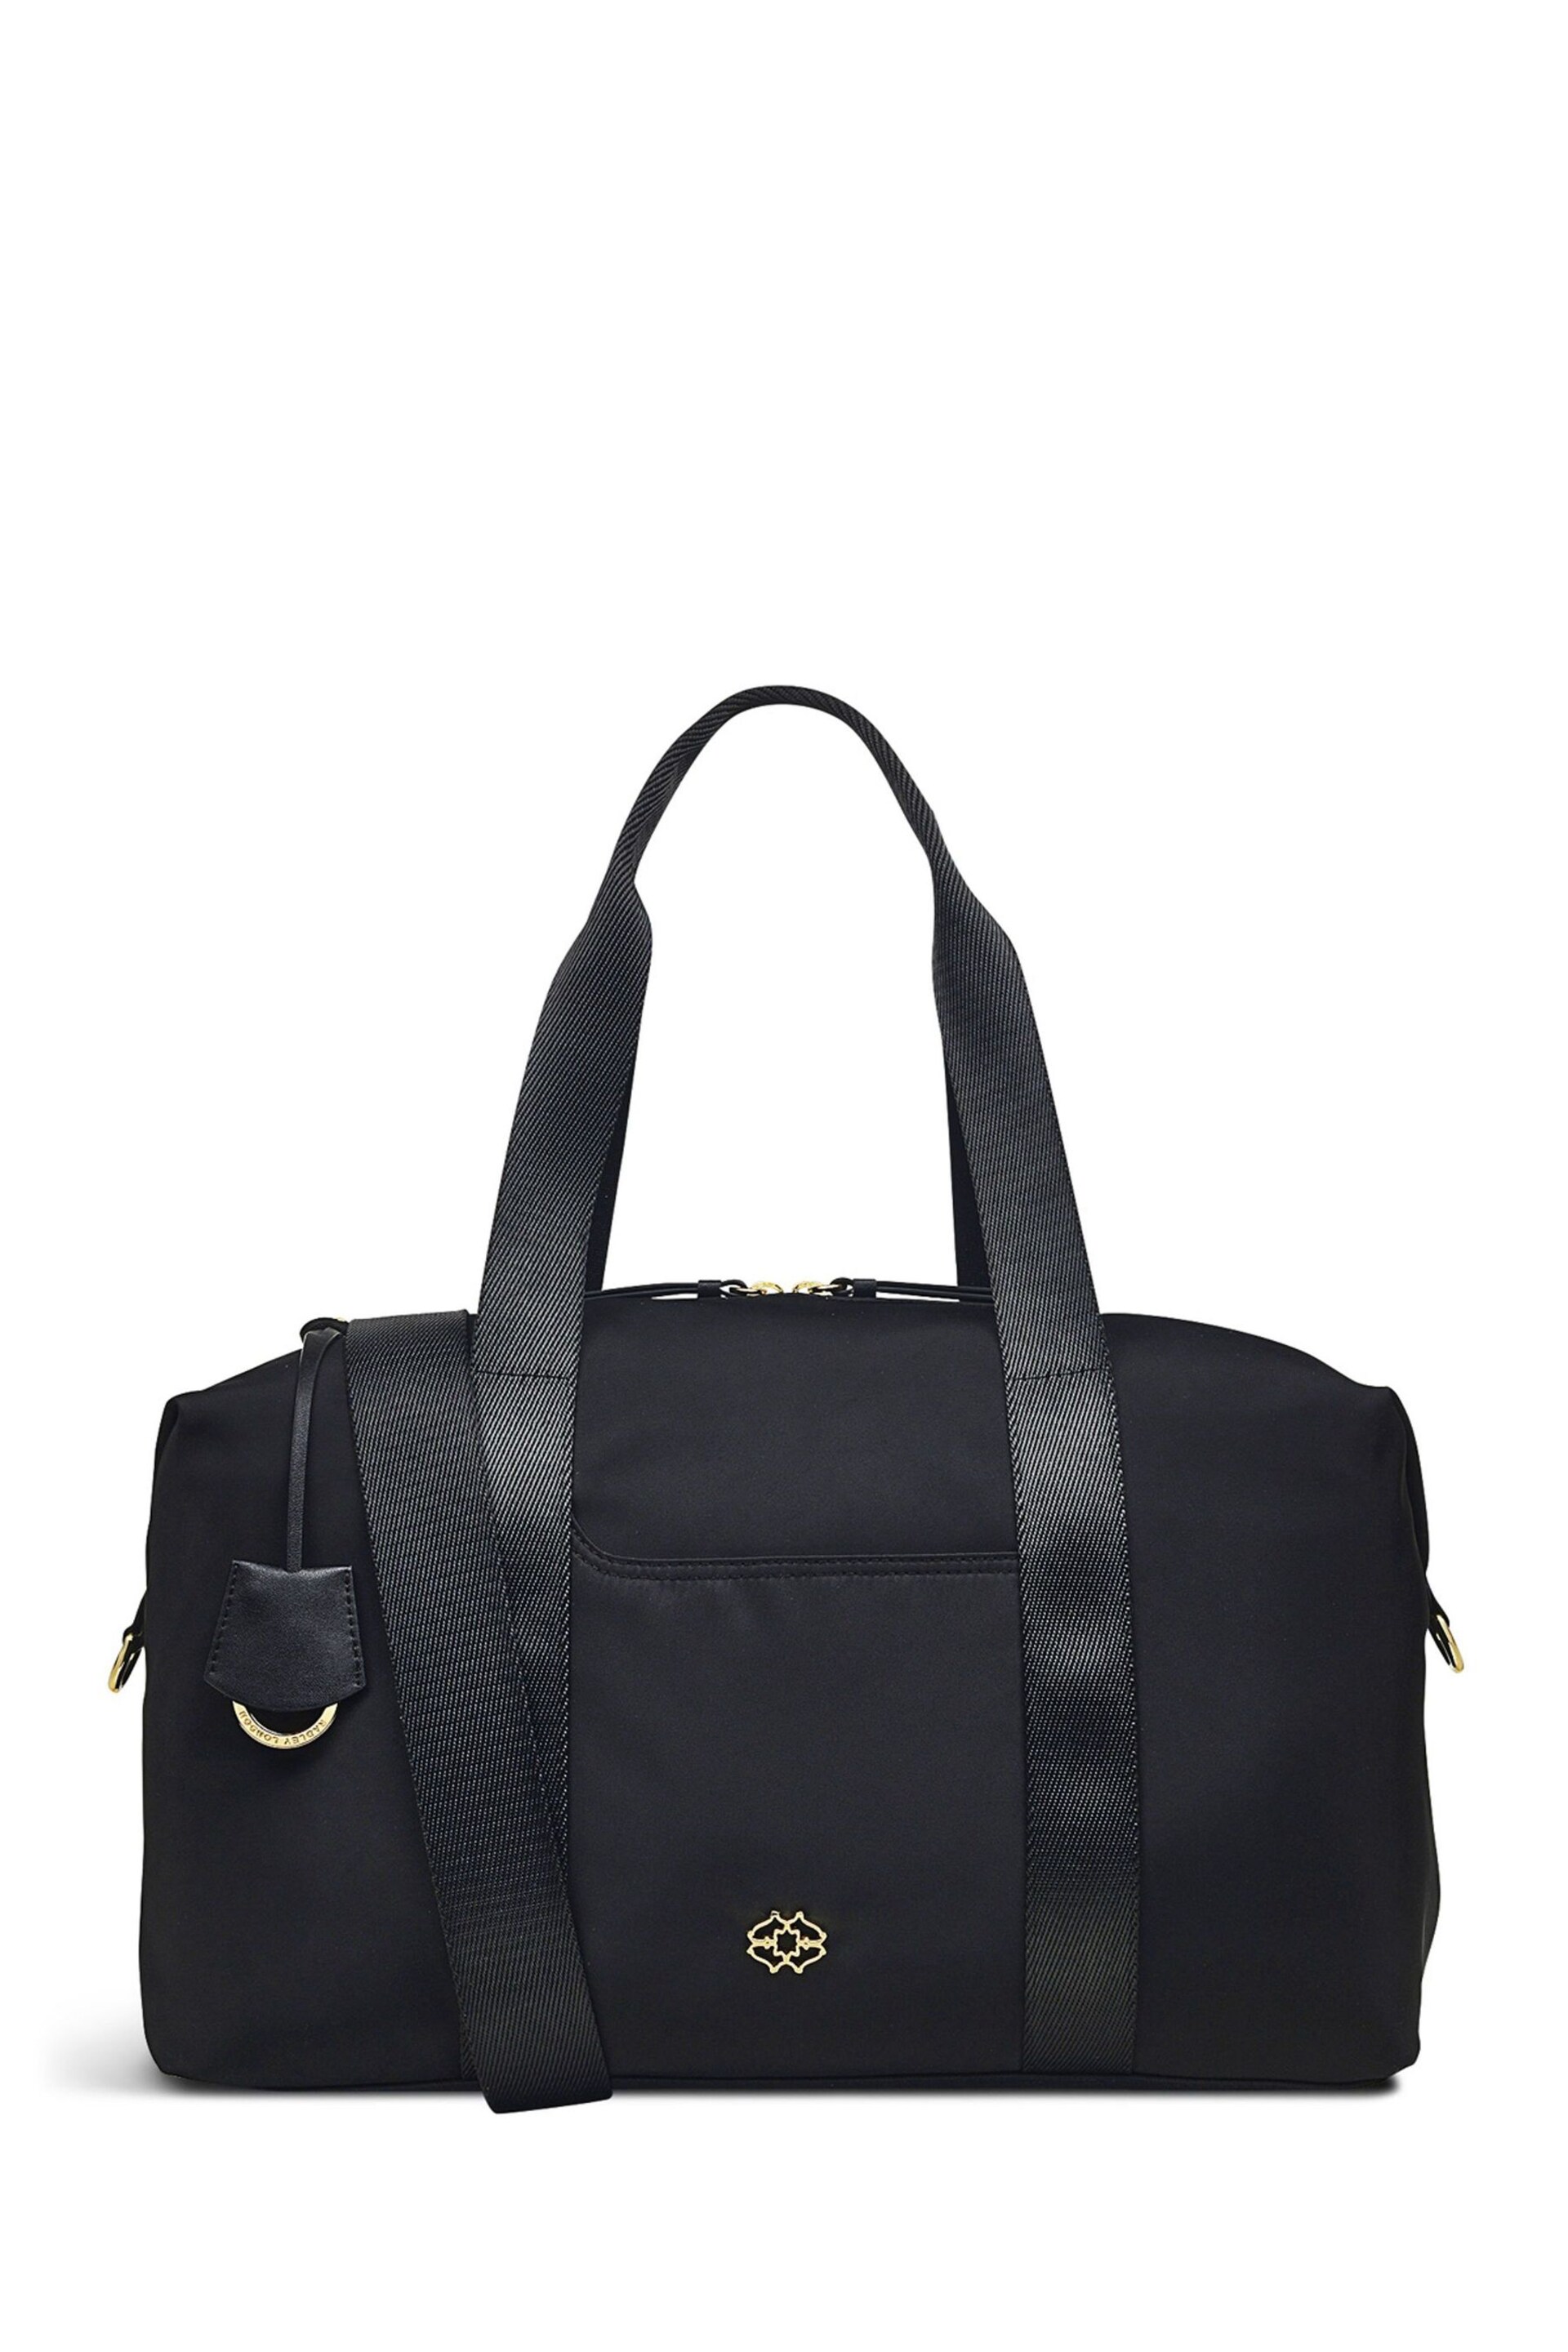 Radley London Medium 24/7 Zip-Top Black Travel Bag - Image 1 of 4